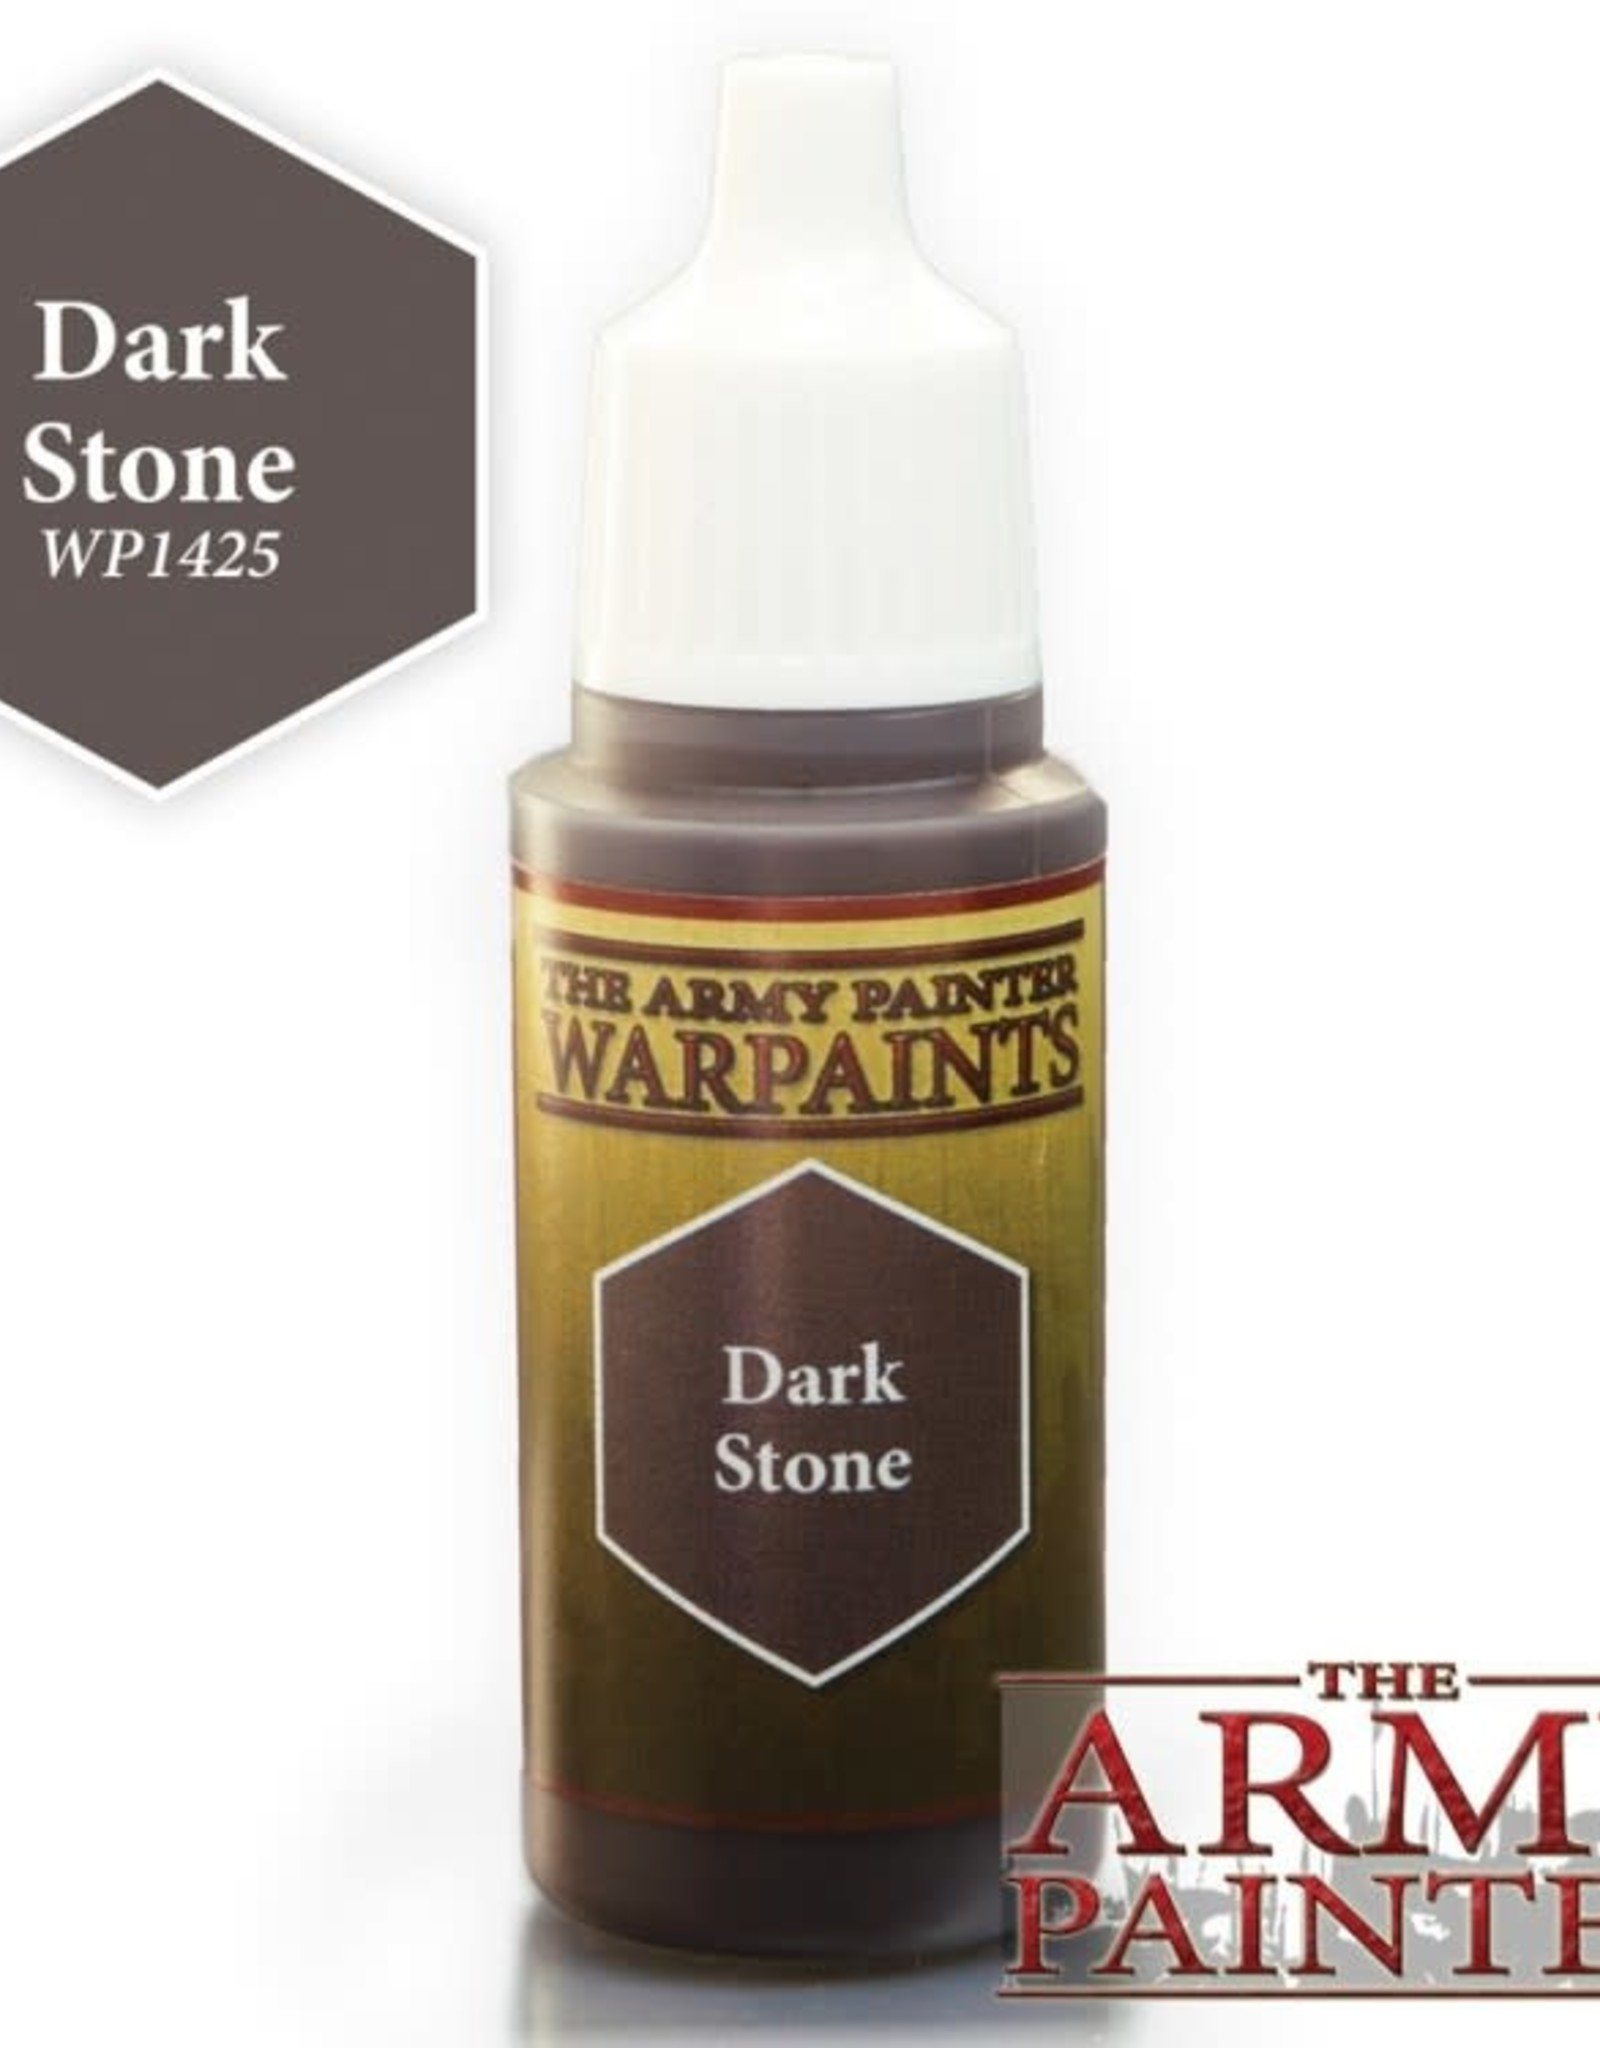 The Army Painter Warpaints - Dark Stone